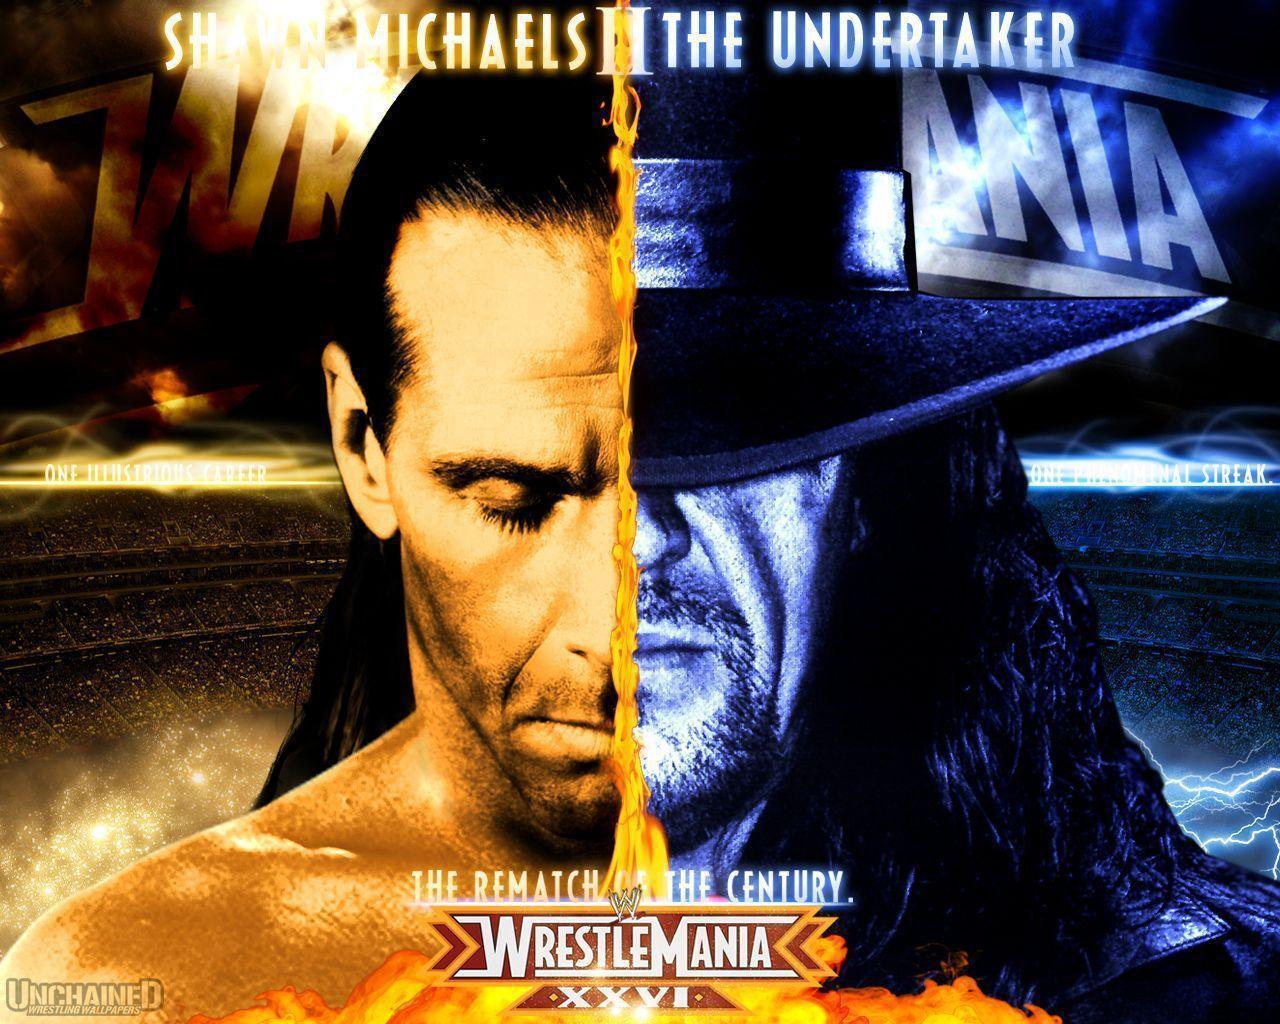 WWE WrestleMania Shawn Michaels vs The Undertaker II